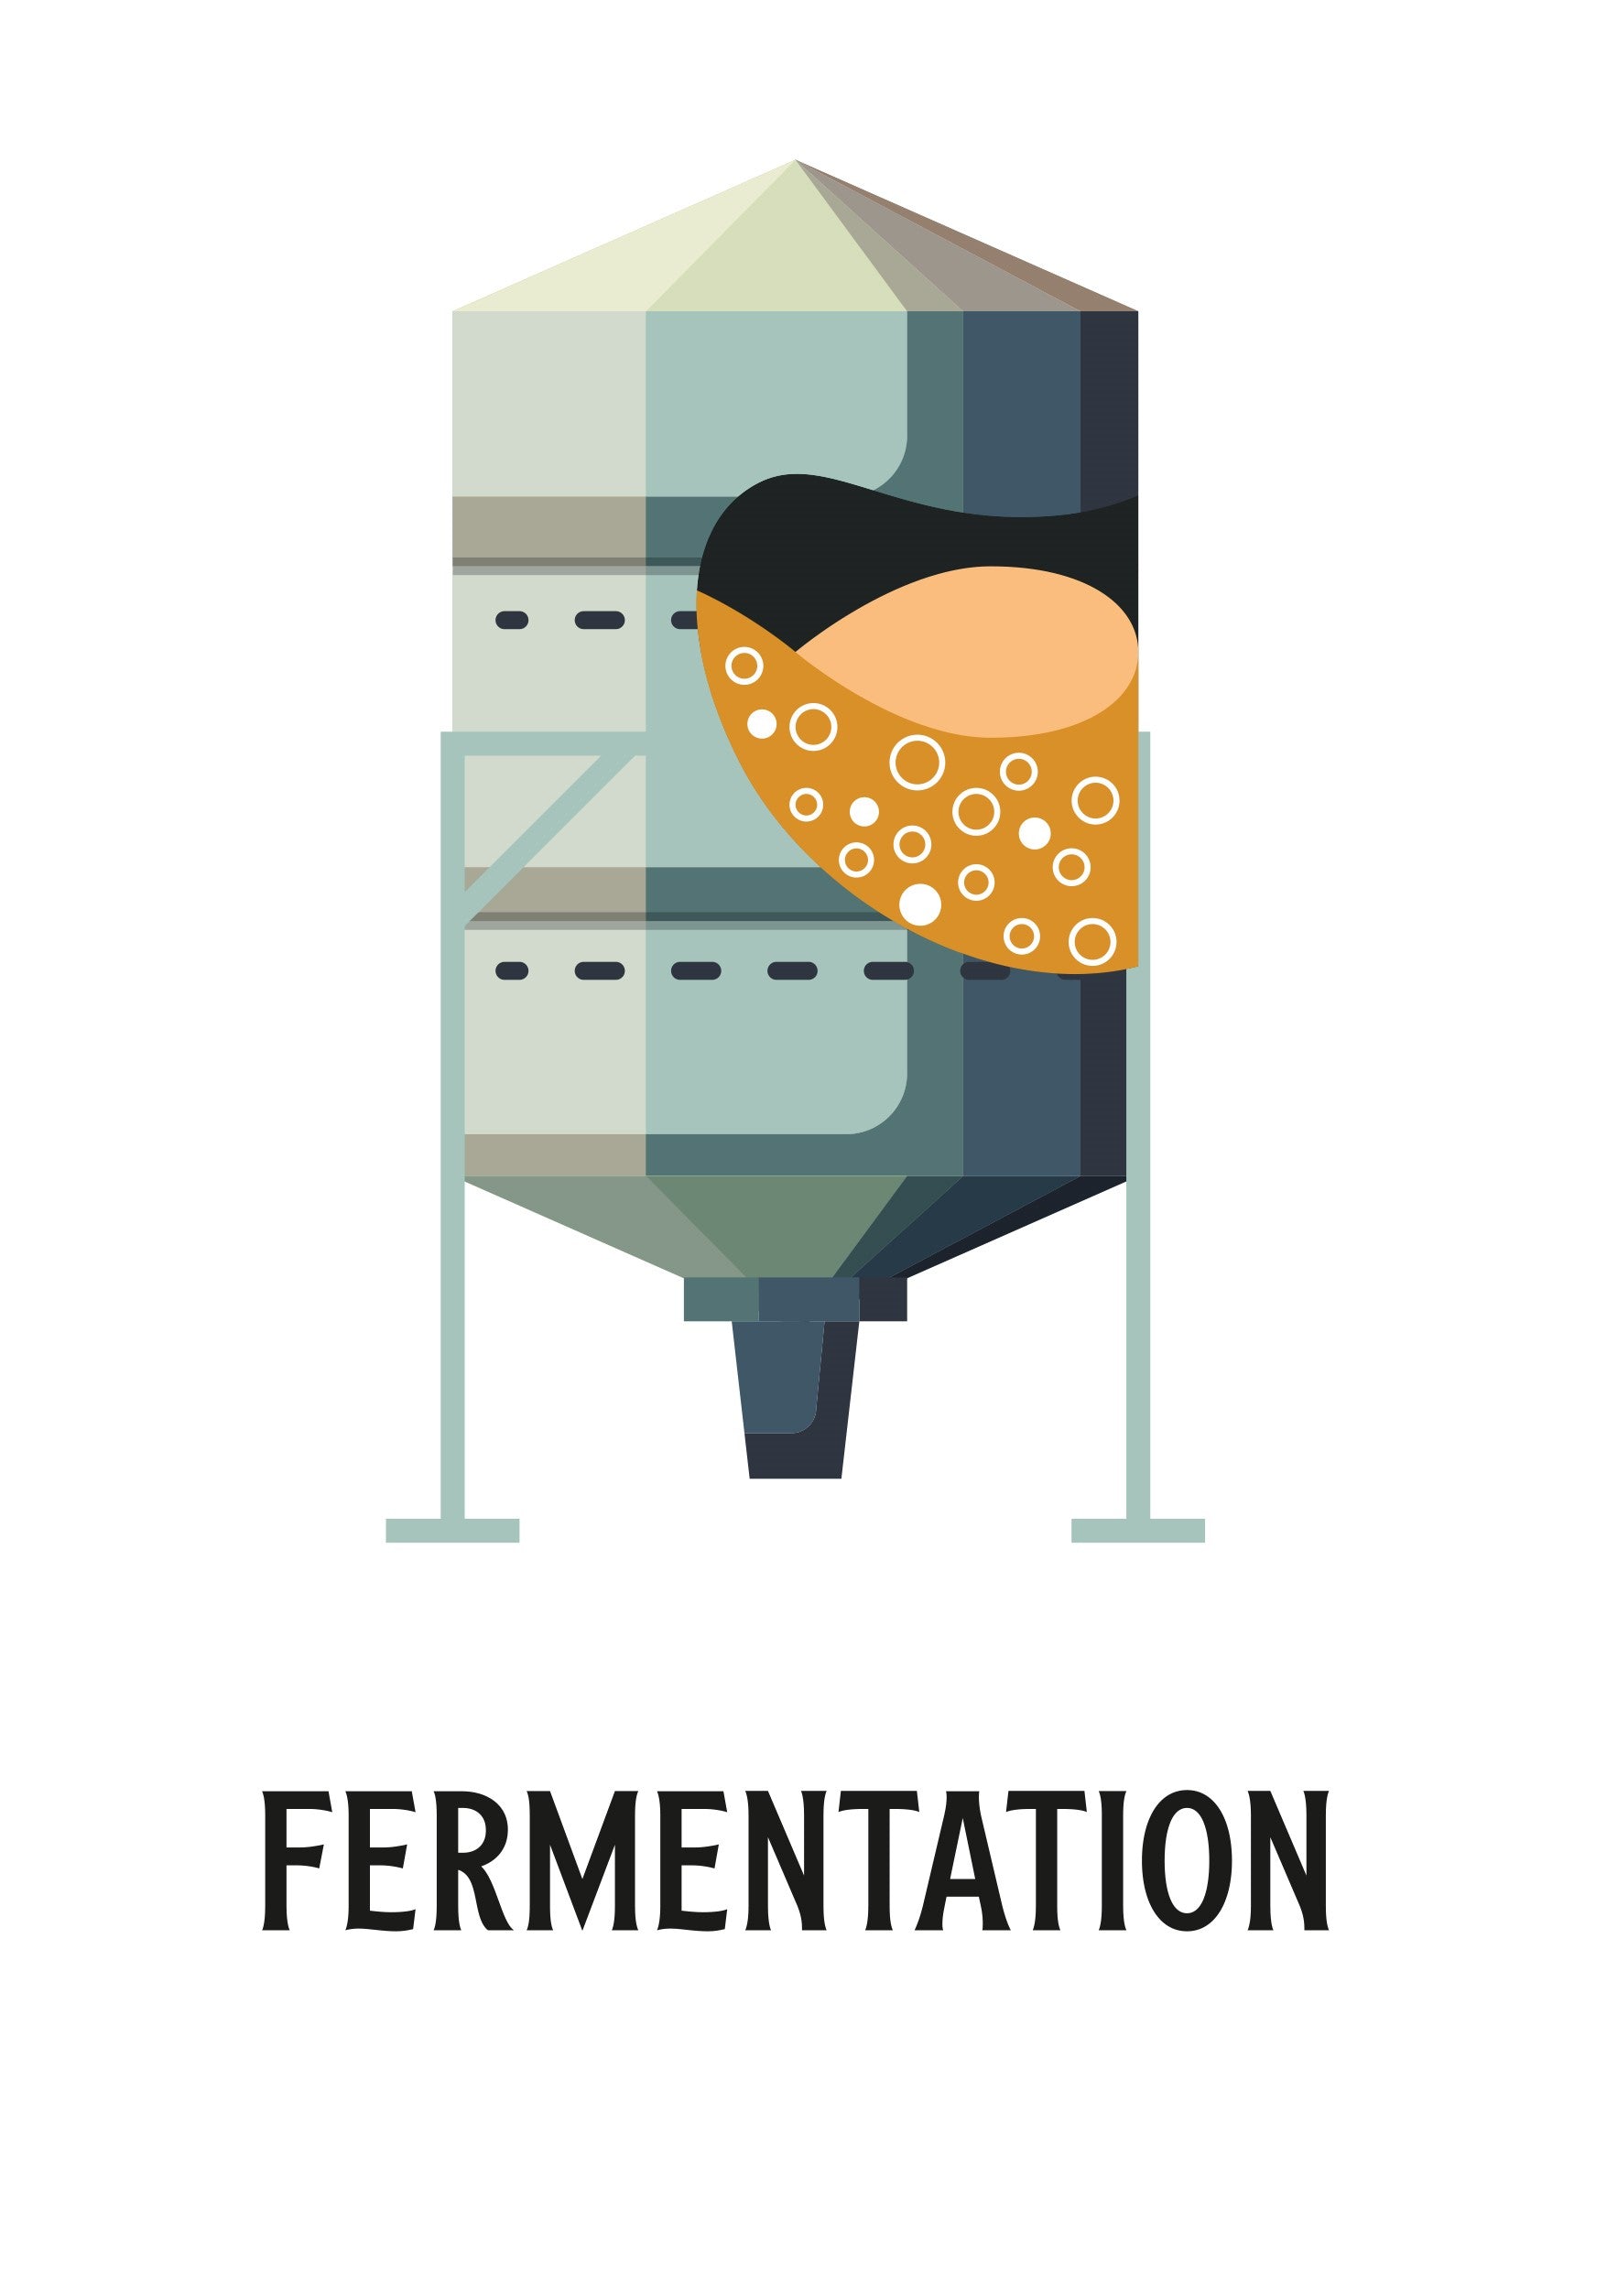 Fermentation vessel